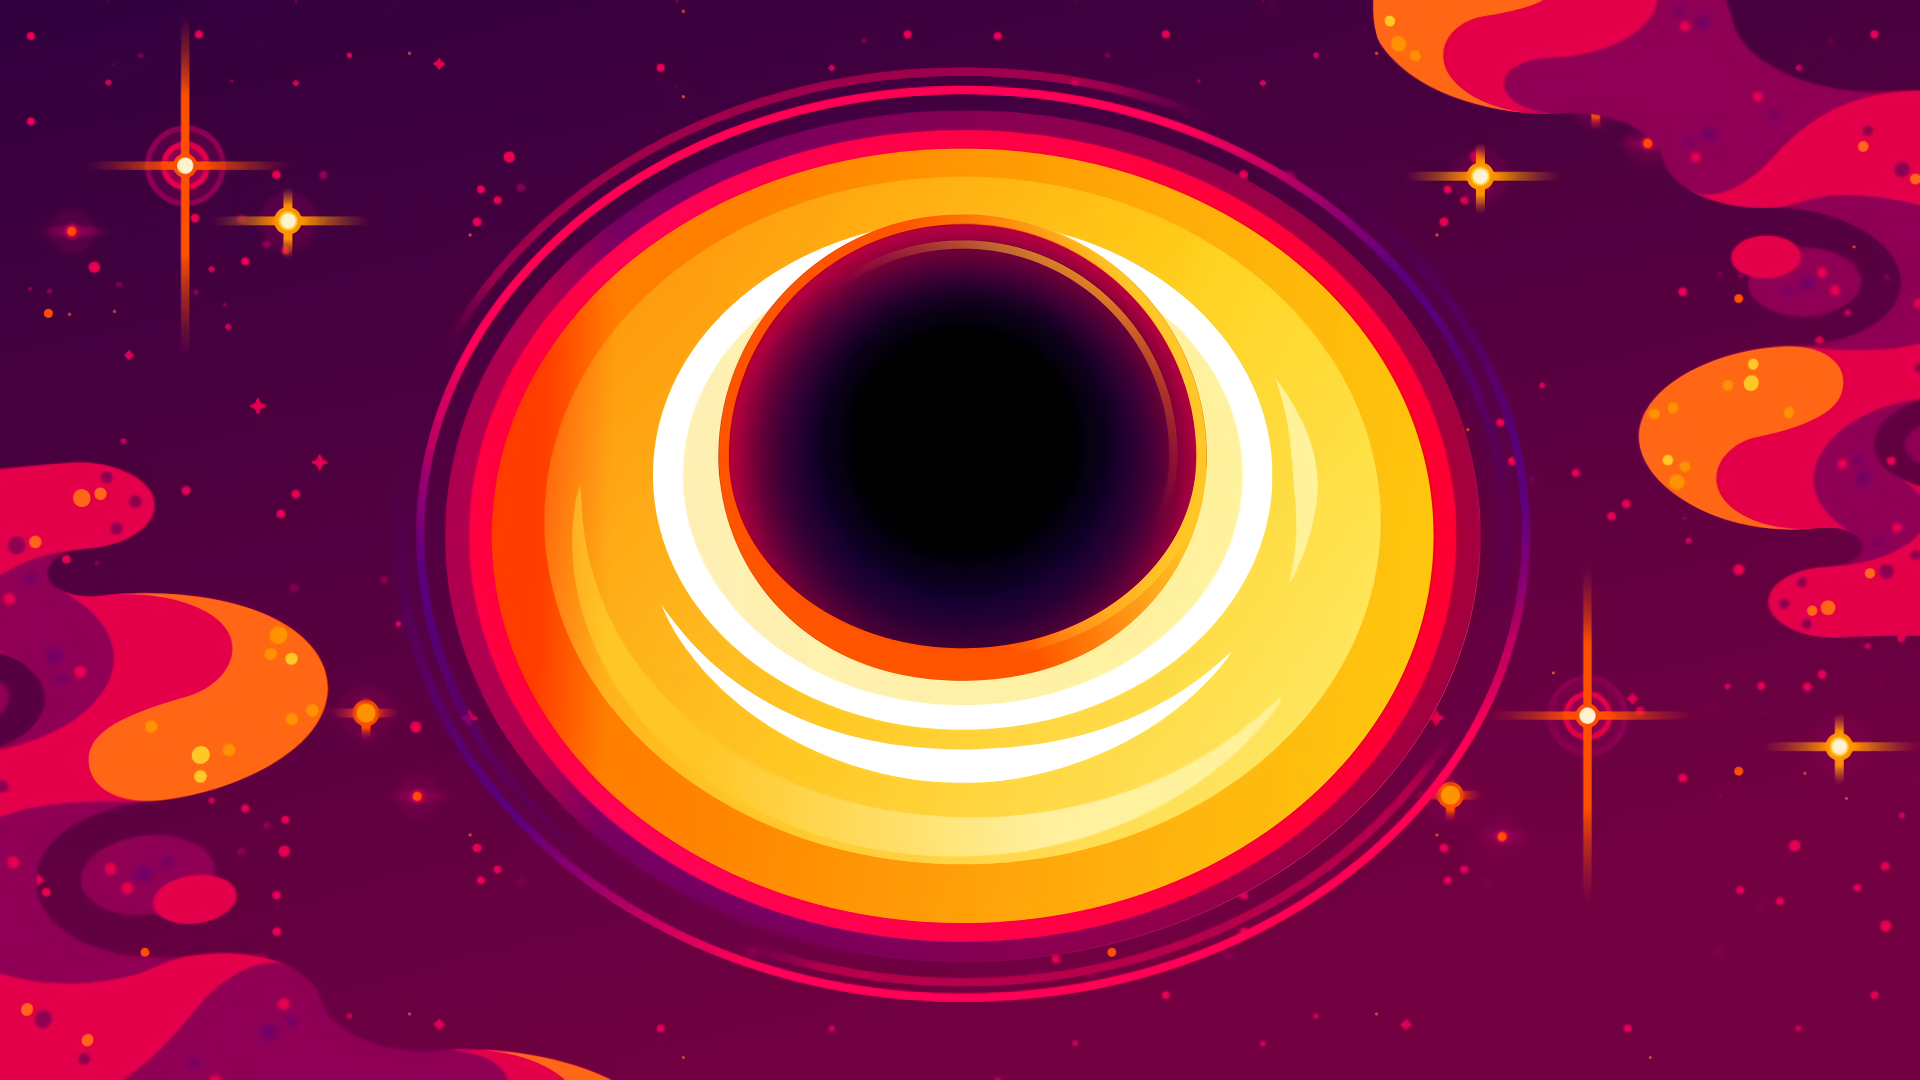 Black Hole SciFi Art 2021 Wallpaper, HD Artist 4K Wallpapers, Images ...